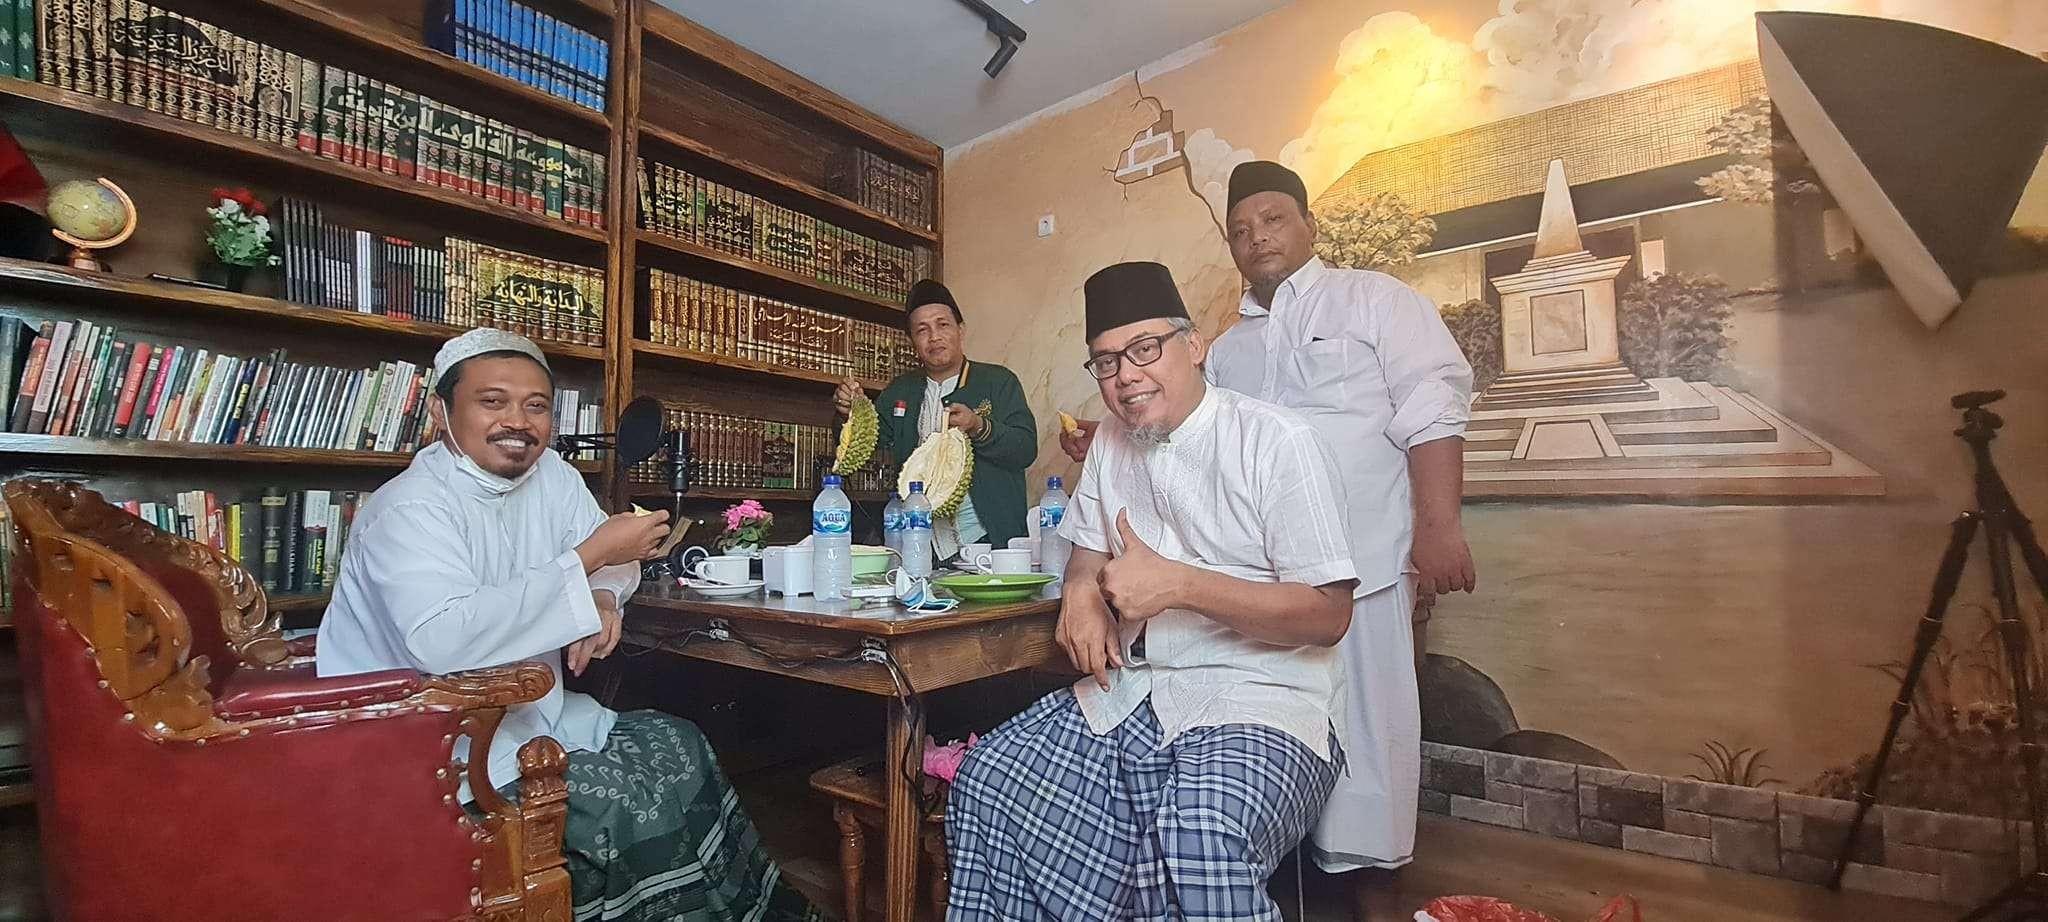 Ust Ma'ruf Khozin, reuni kecil-kecilan dengan teman Pondok Pesantren Ploso Kediri, yang ada di kawasan Depok sambil makan durian, bersama Tuan Muda Robi Cahyadi. (Foto: Istimeawa)